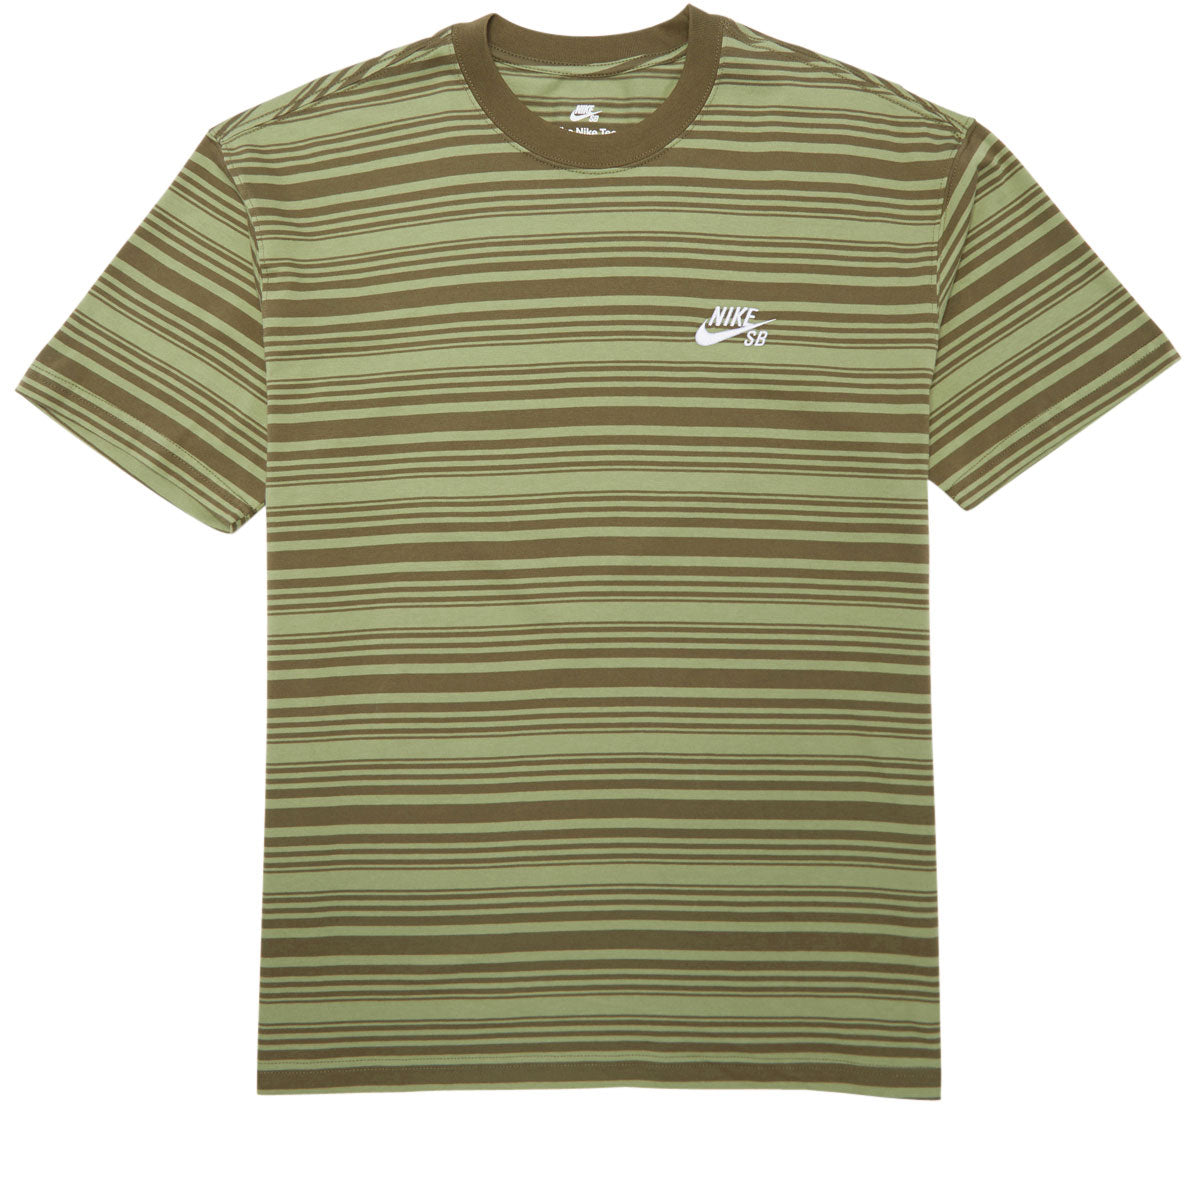 Nike SB Striped T-Shirt - Oil Green image 1